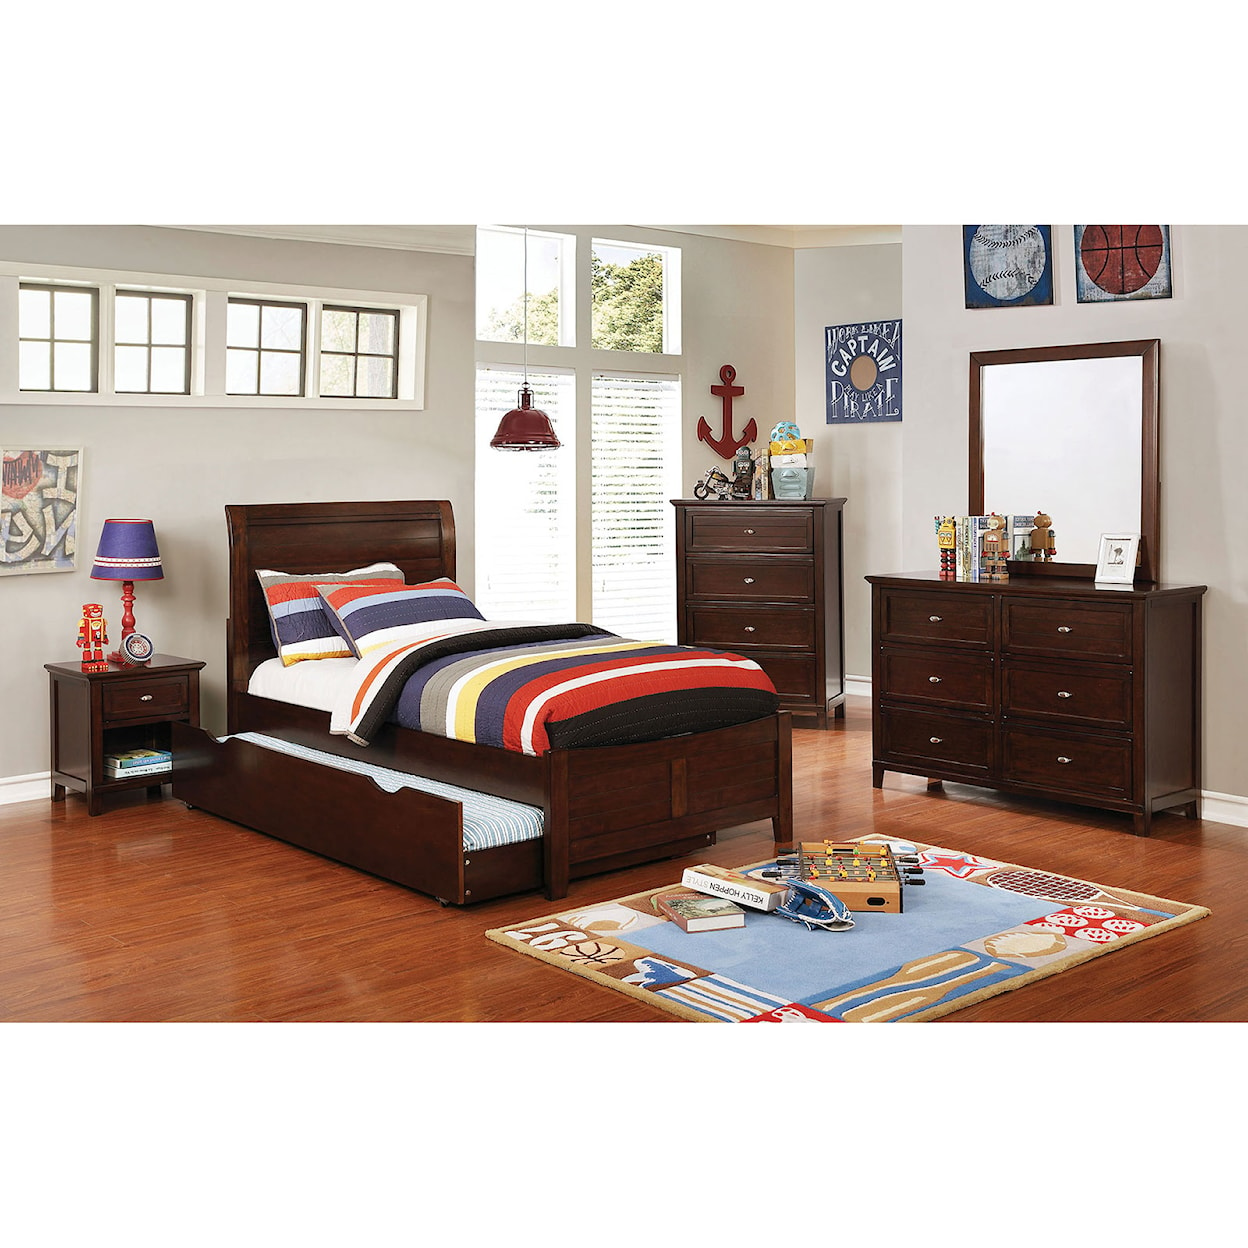 Furniture of America Brogan 4 Pc. Twin Bedroom Set